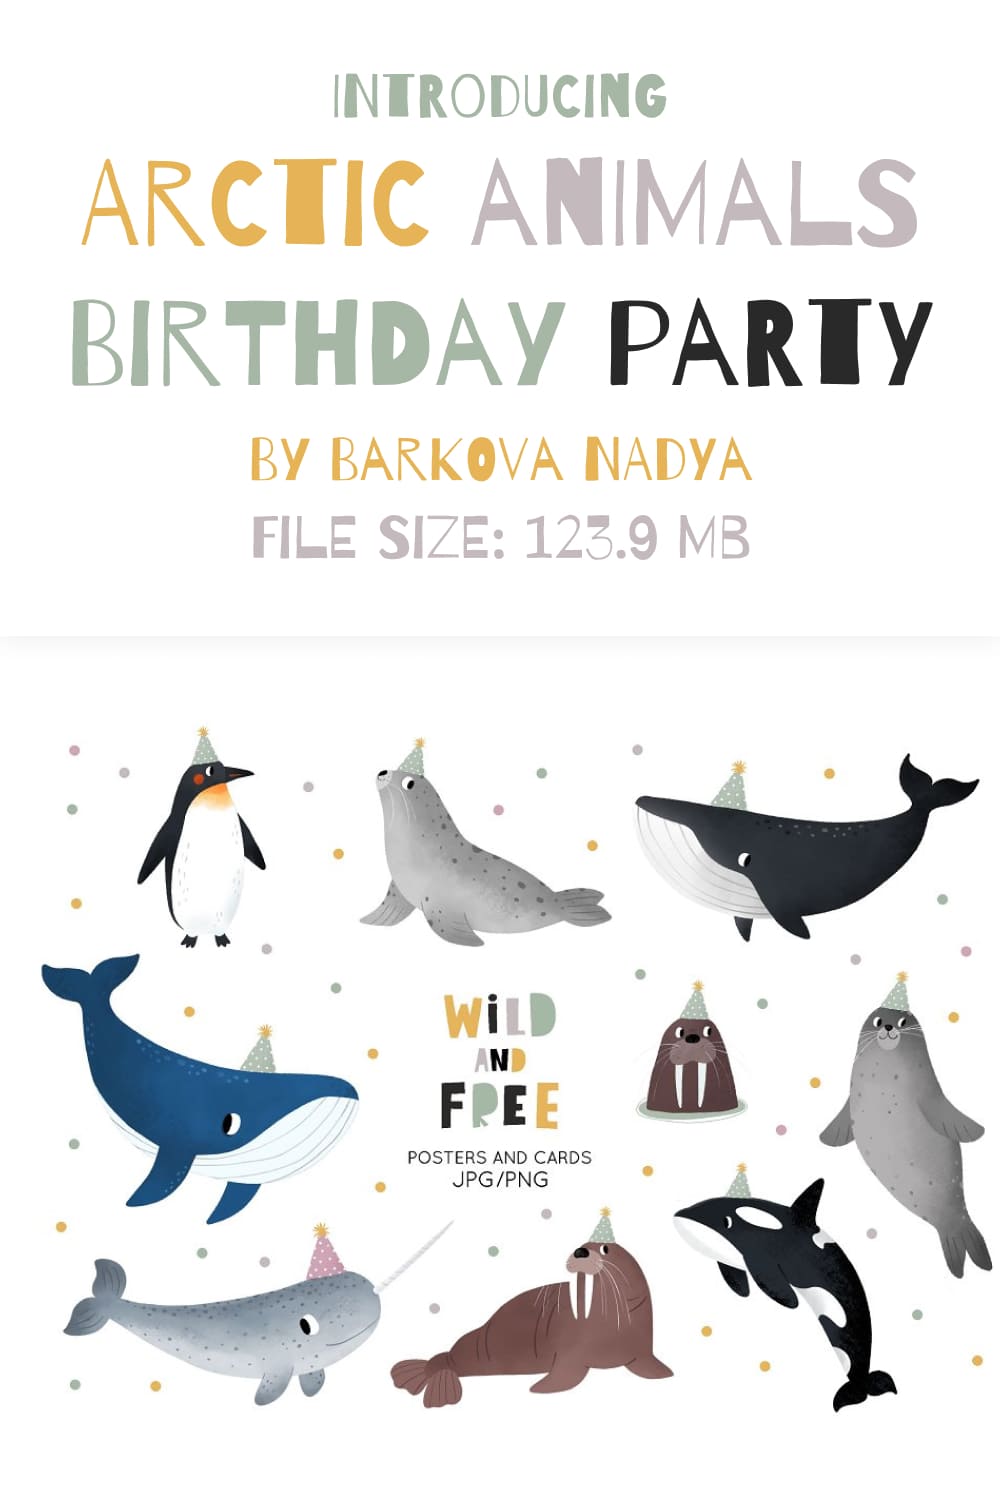 Arctic animals Birthday party Pinterest.